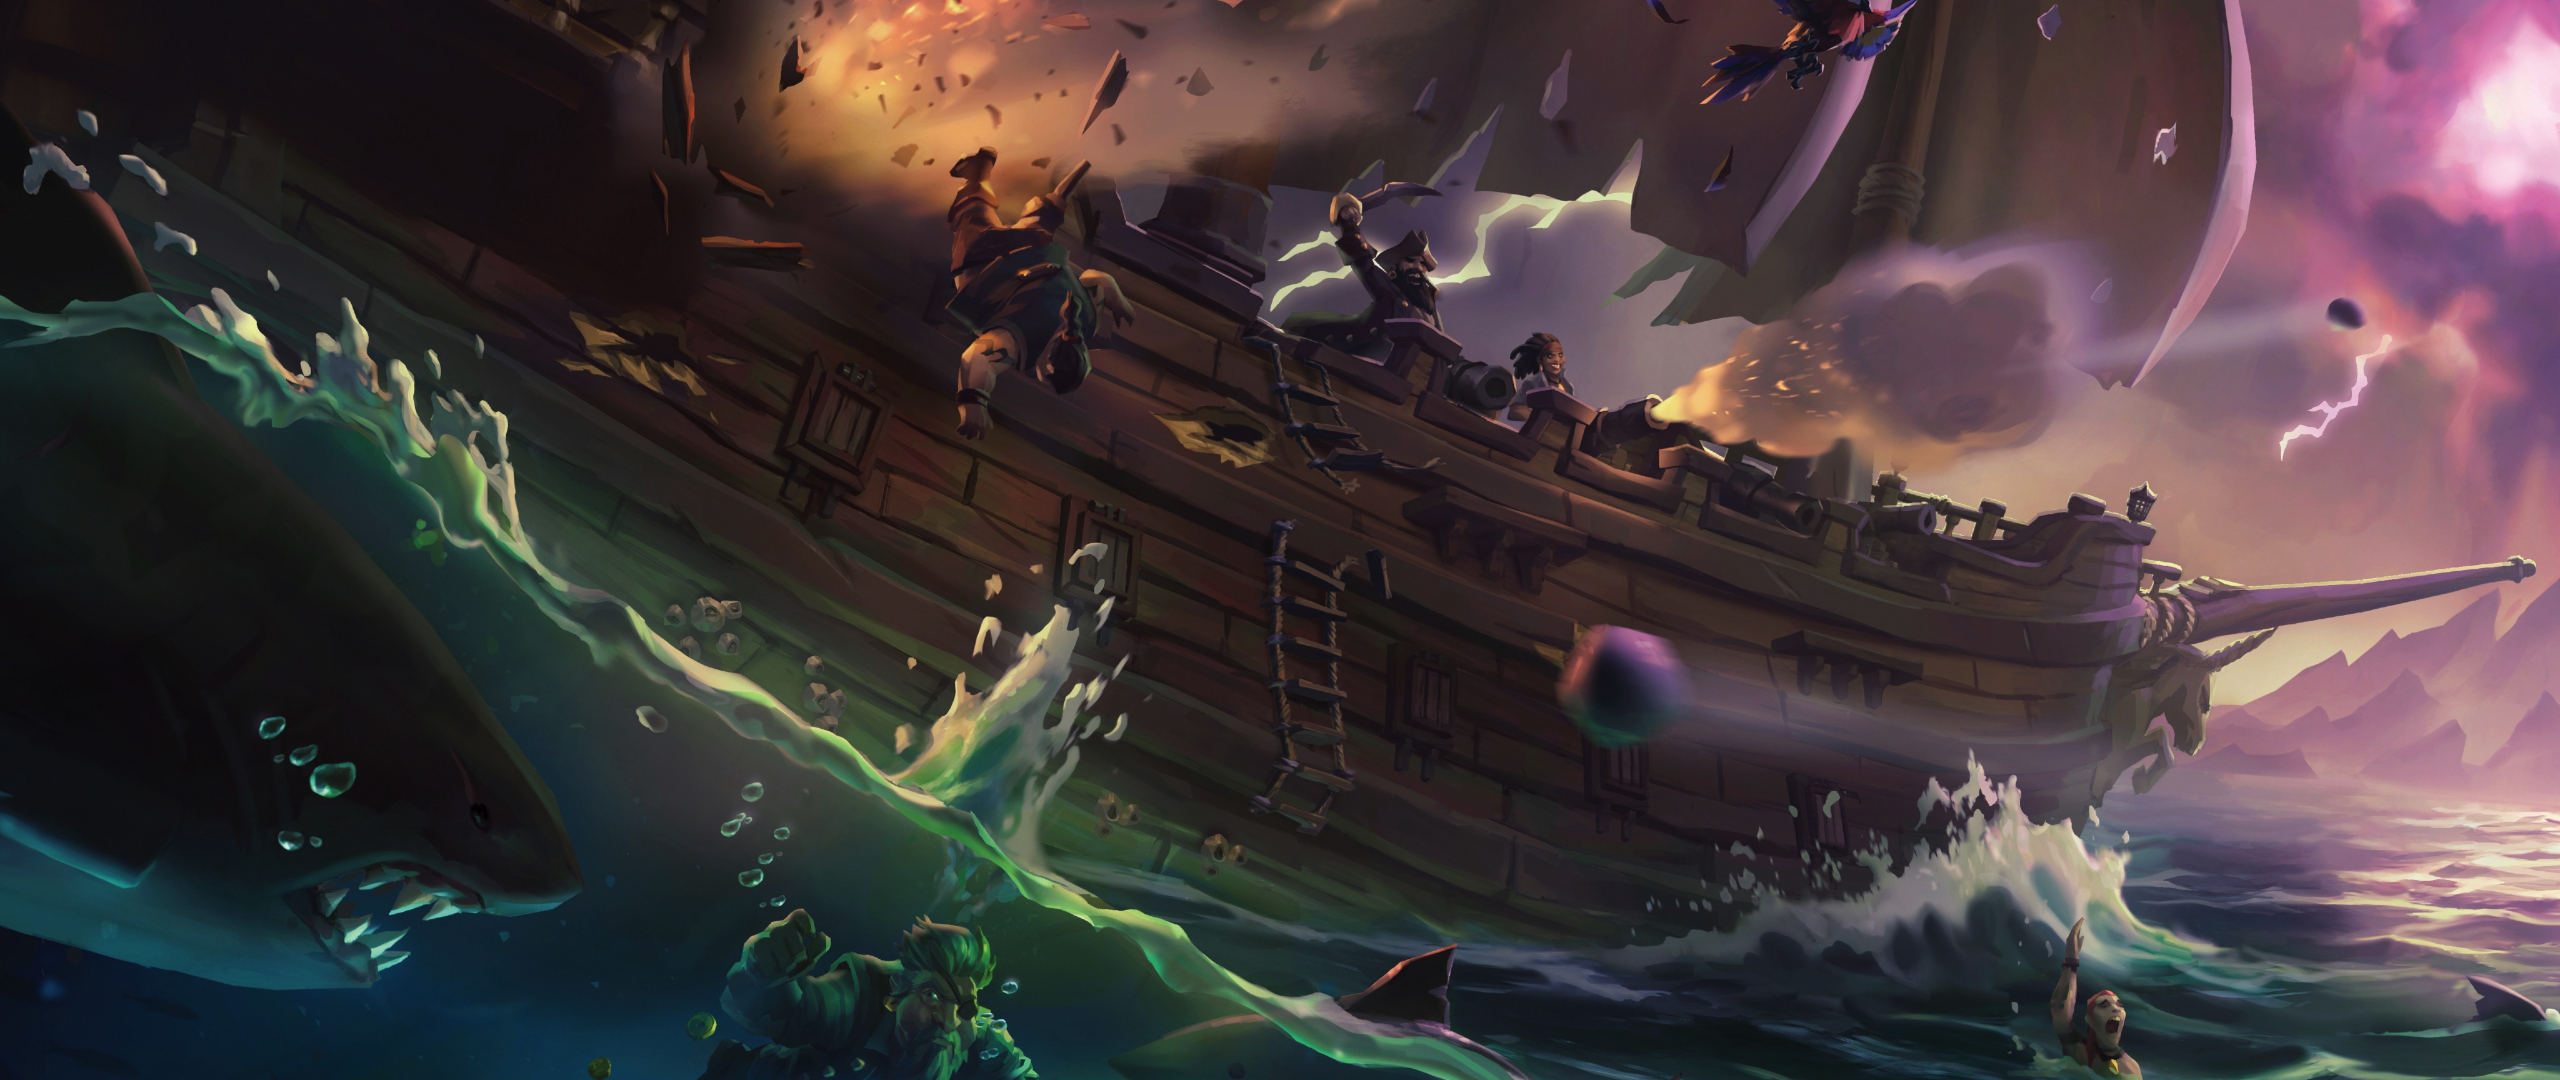 Sea of thieves, ship, pirates, video game, 2560x1080 wallpaper